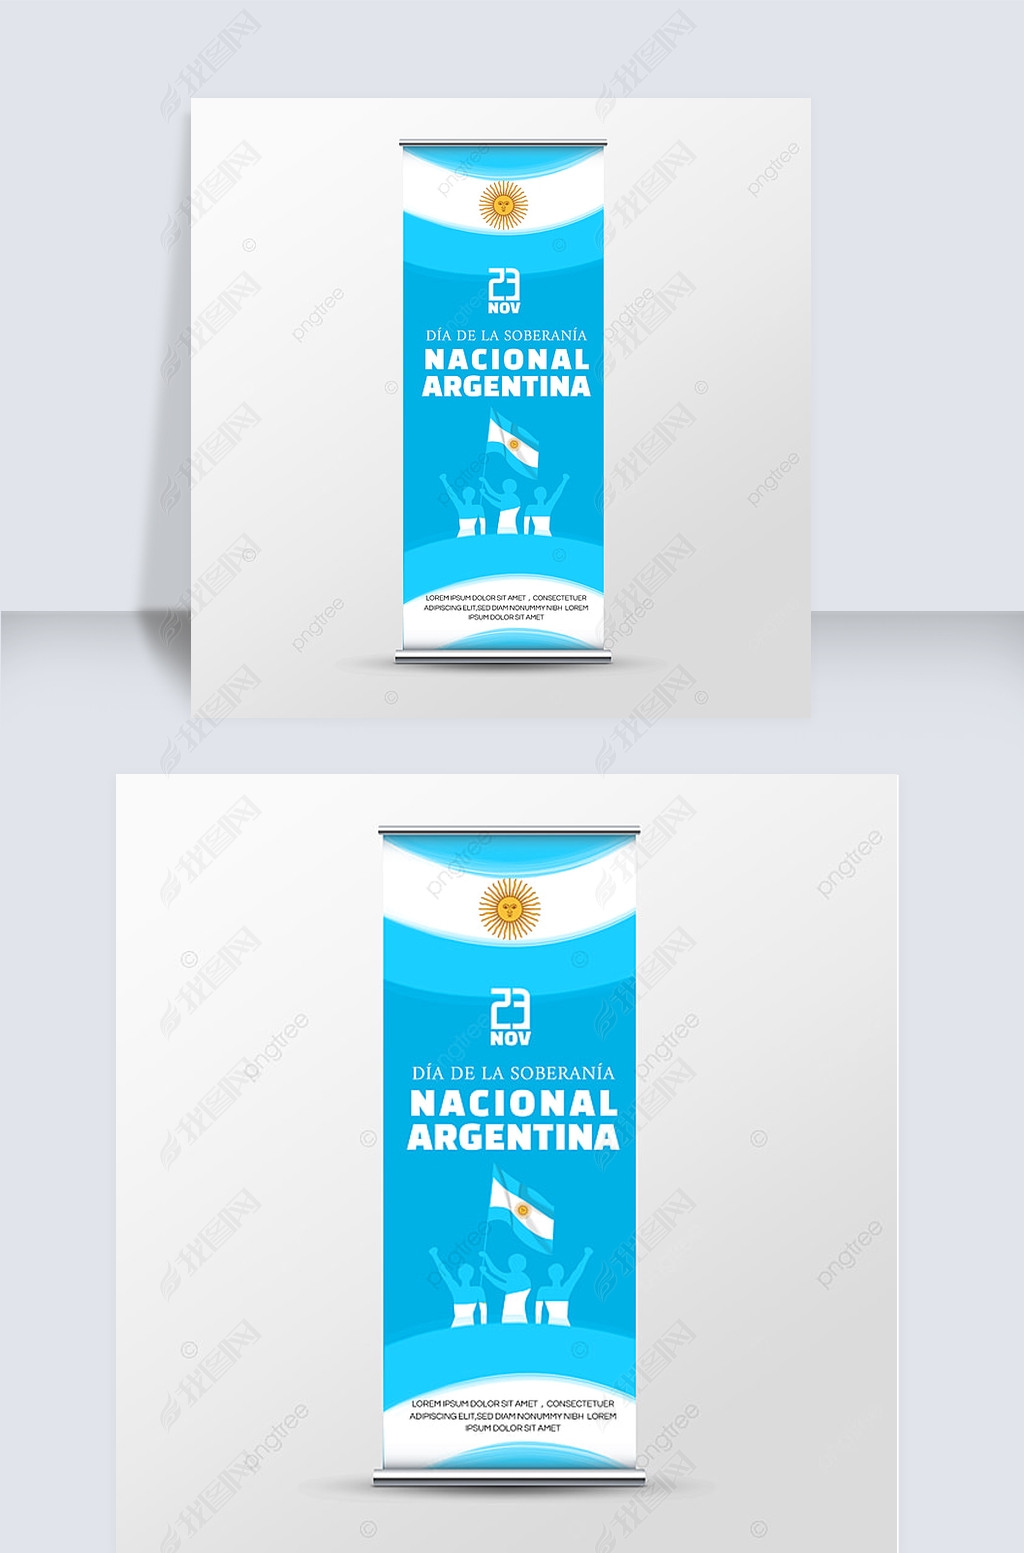 ɫda de la soberana nacional argentina罻ģ